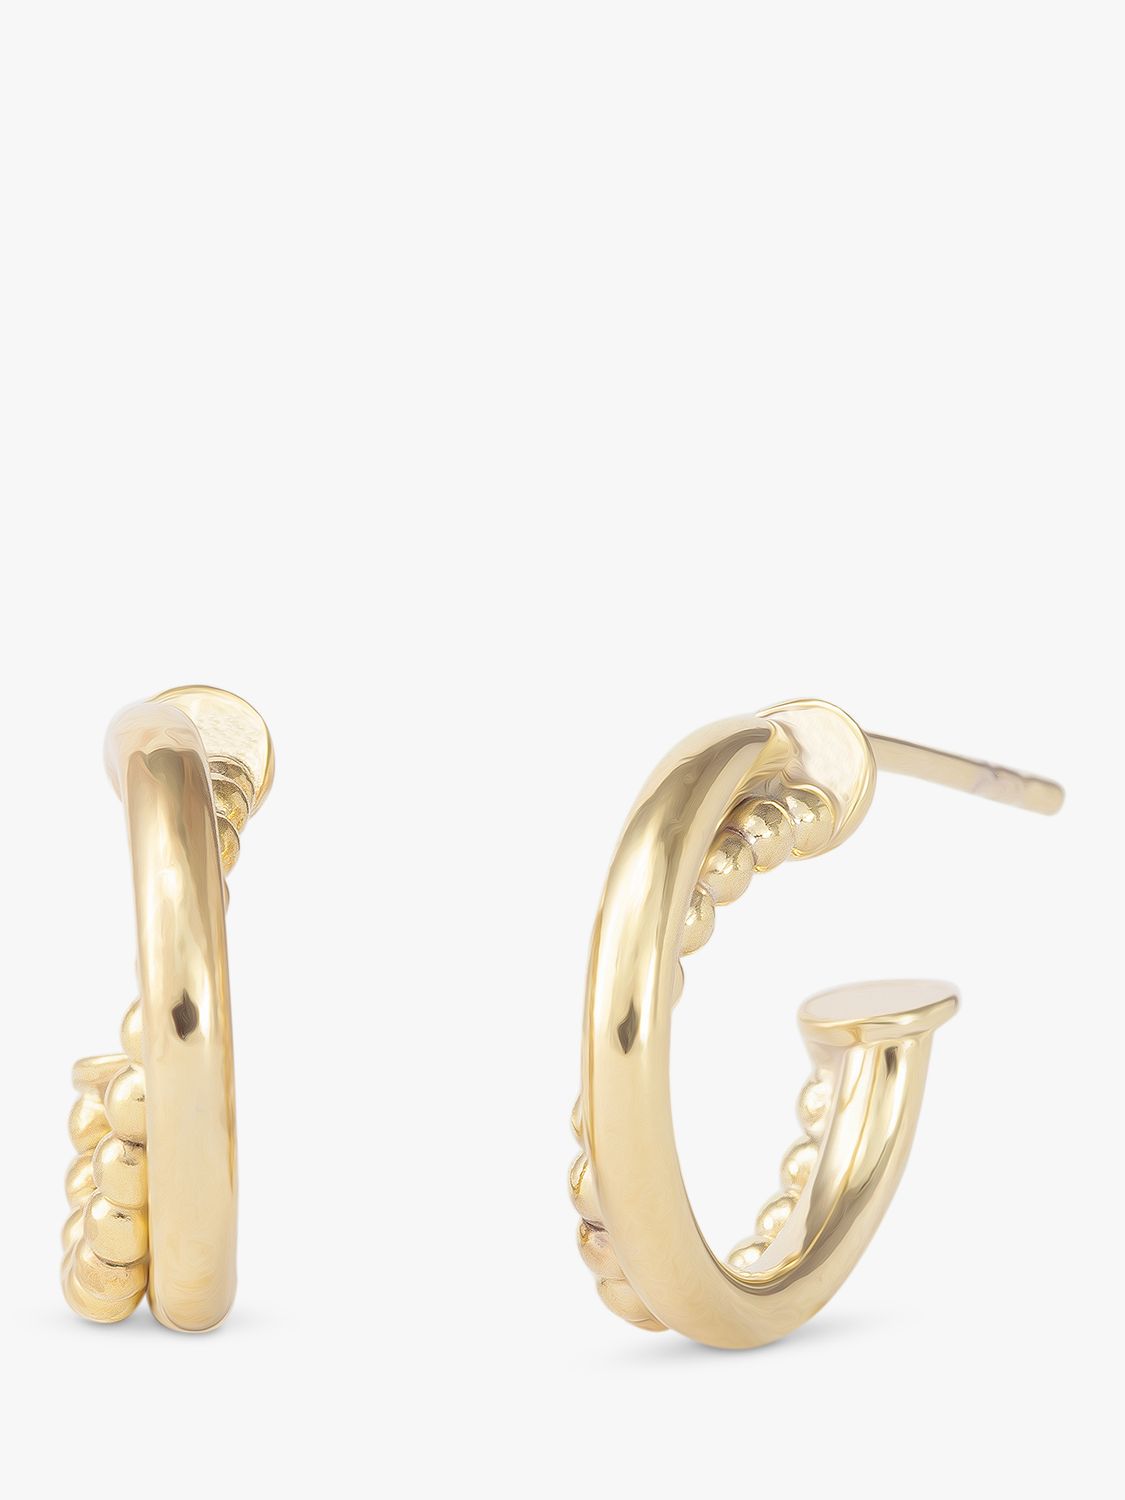 LARNAUTI Intertwined Hoop Earrings, Gold